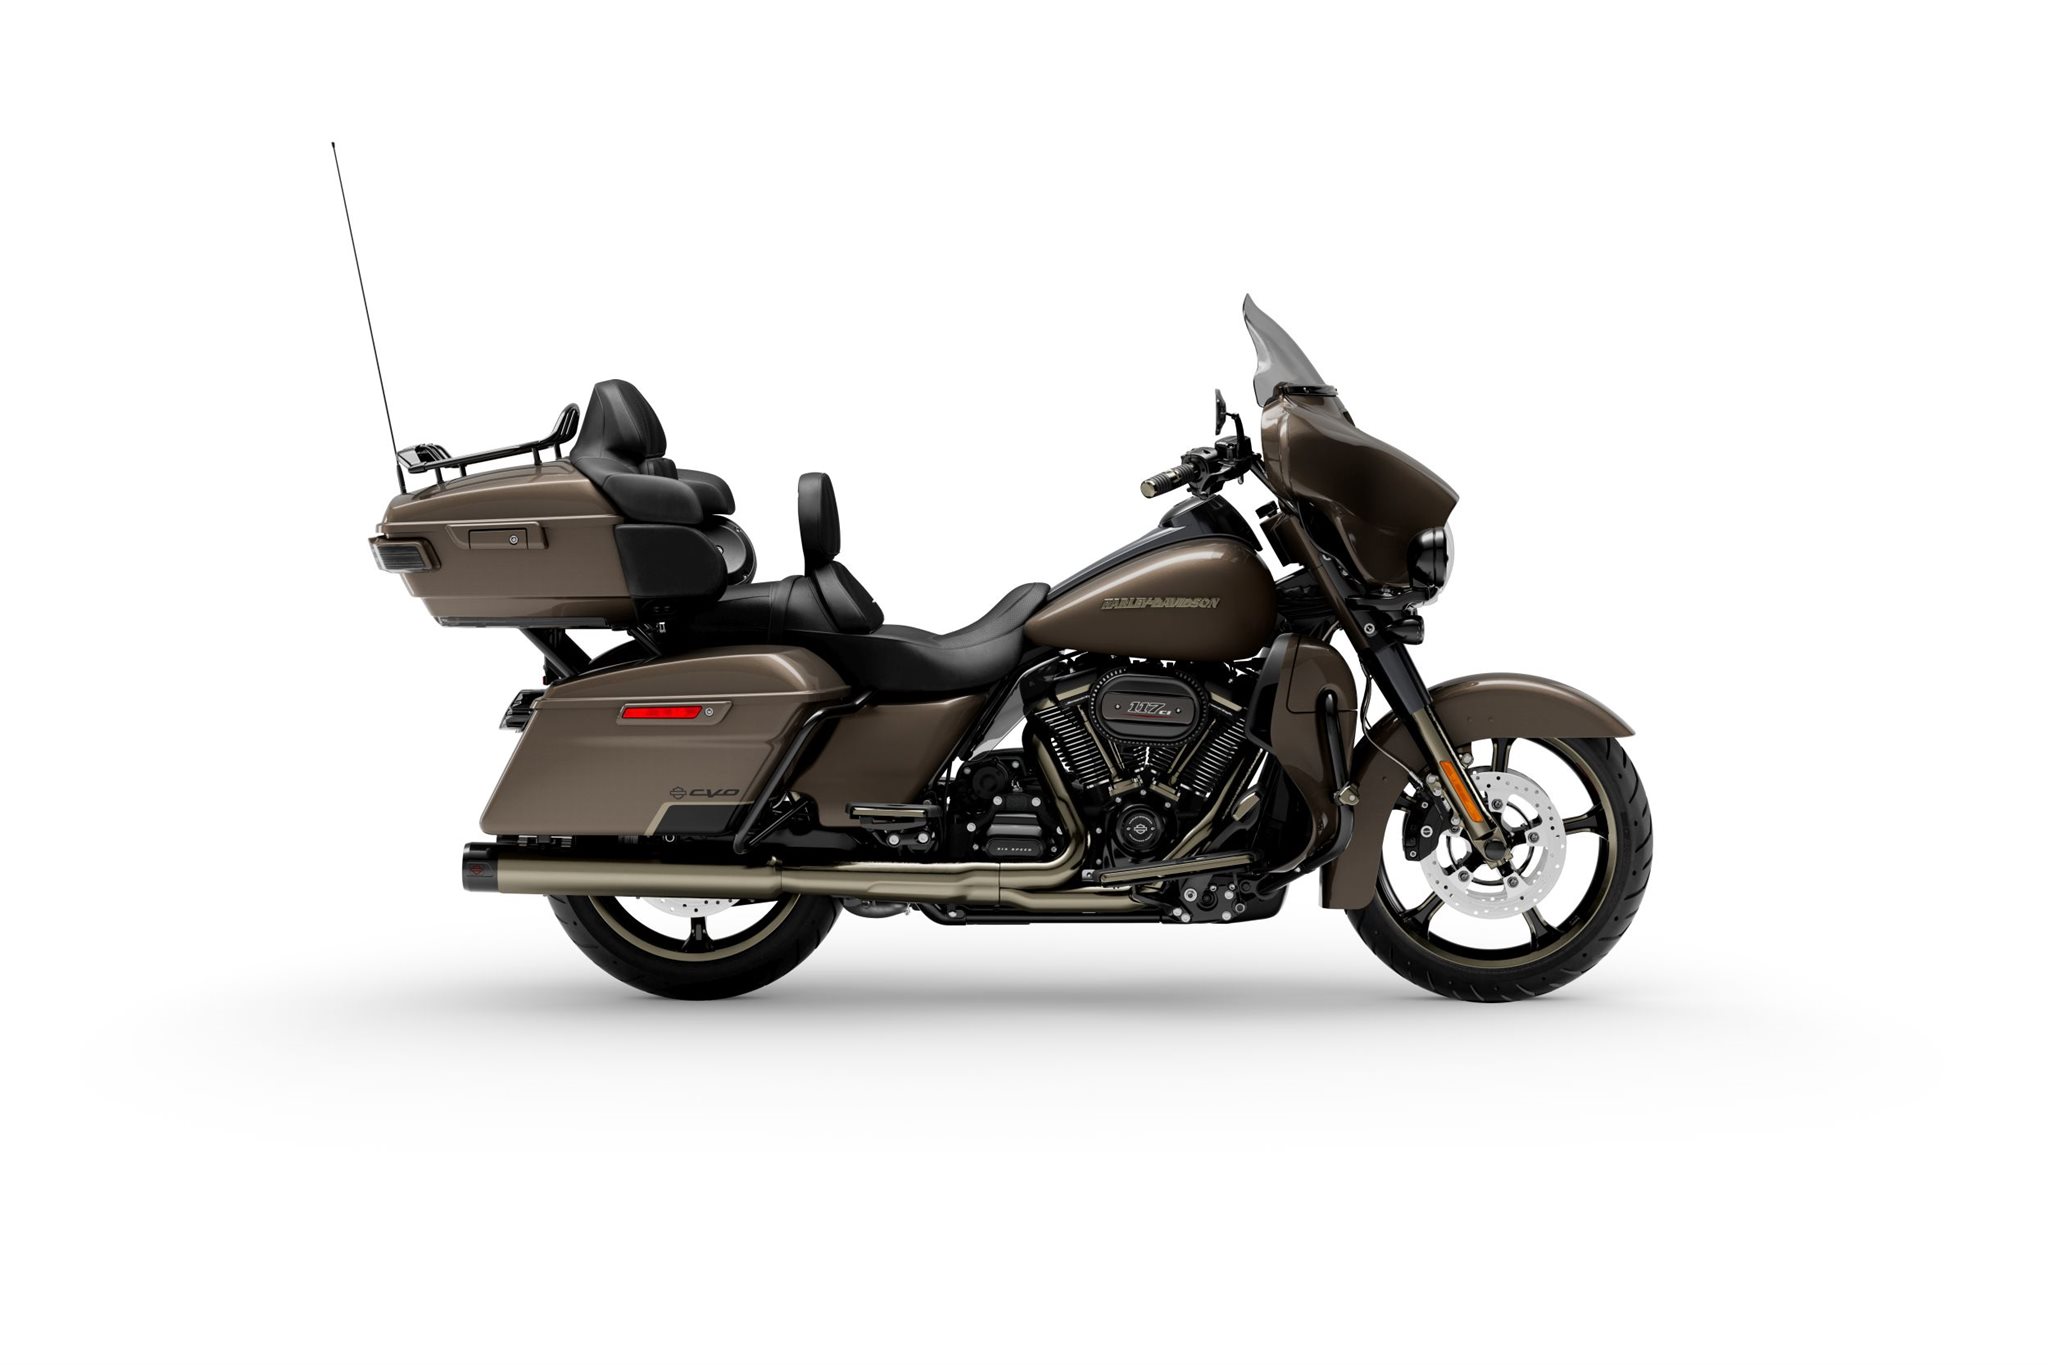 Motorrad Vergleich Harley Davidson Cvo Limited Flhtkse 2021 Vs Aprilia Rs 660 2021